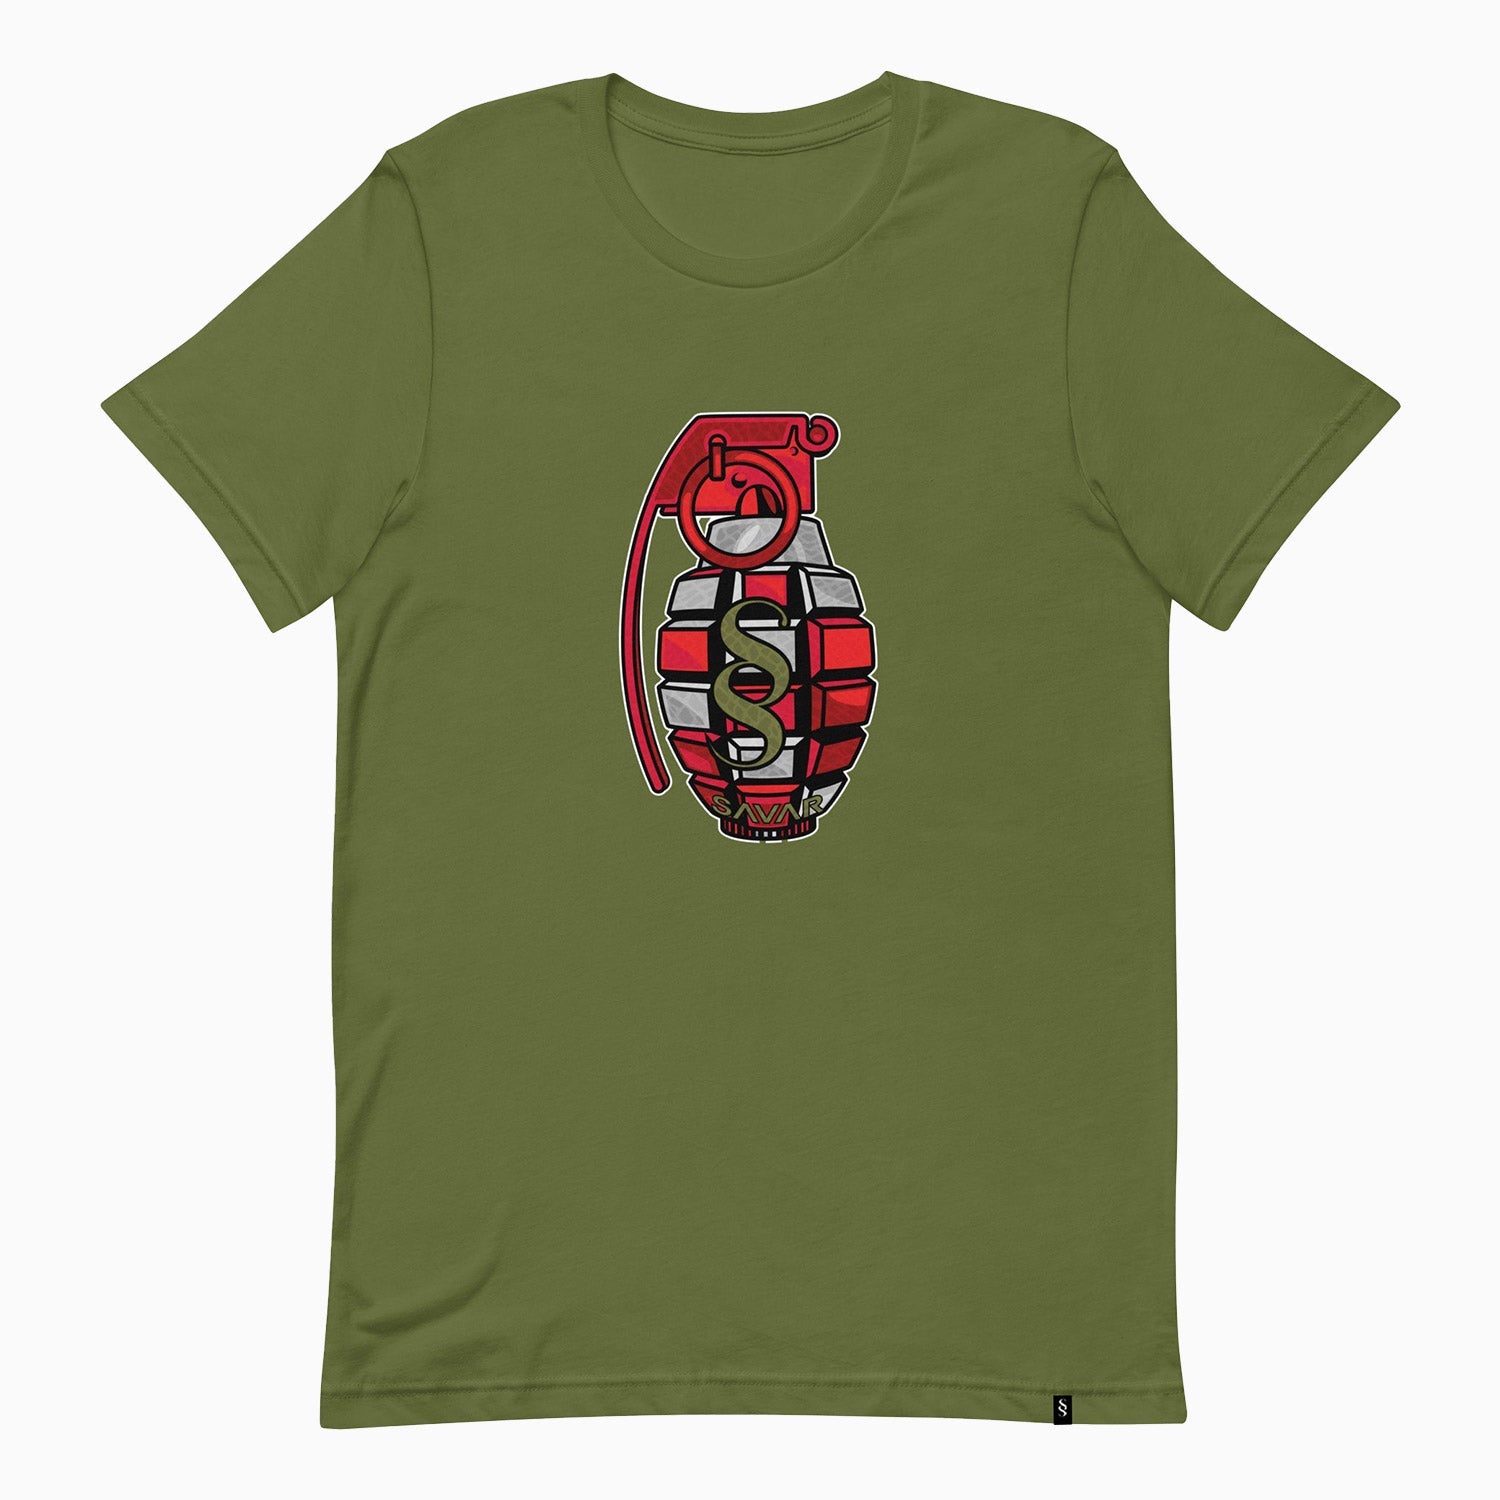 grenade-design-printed-crew-neck-olive-green-t-shirt-for-men-st102-327